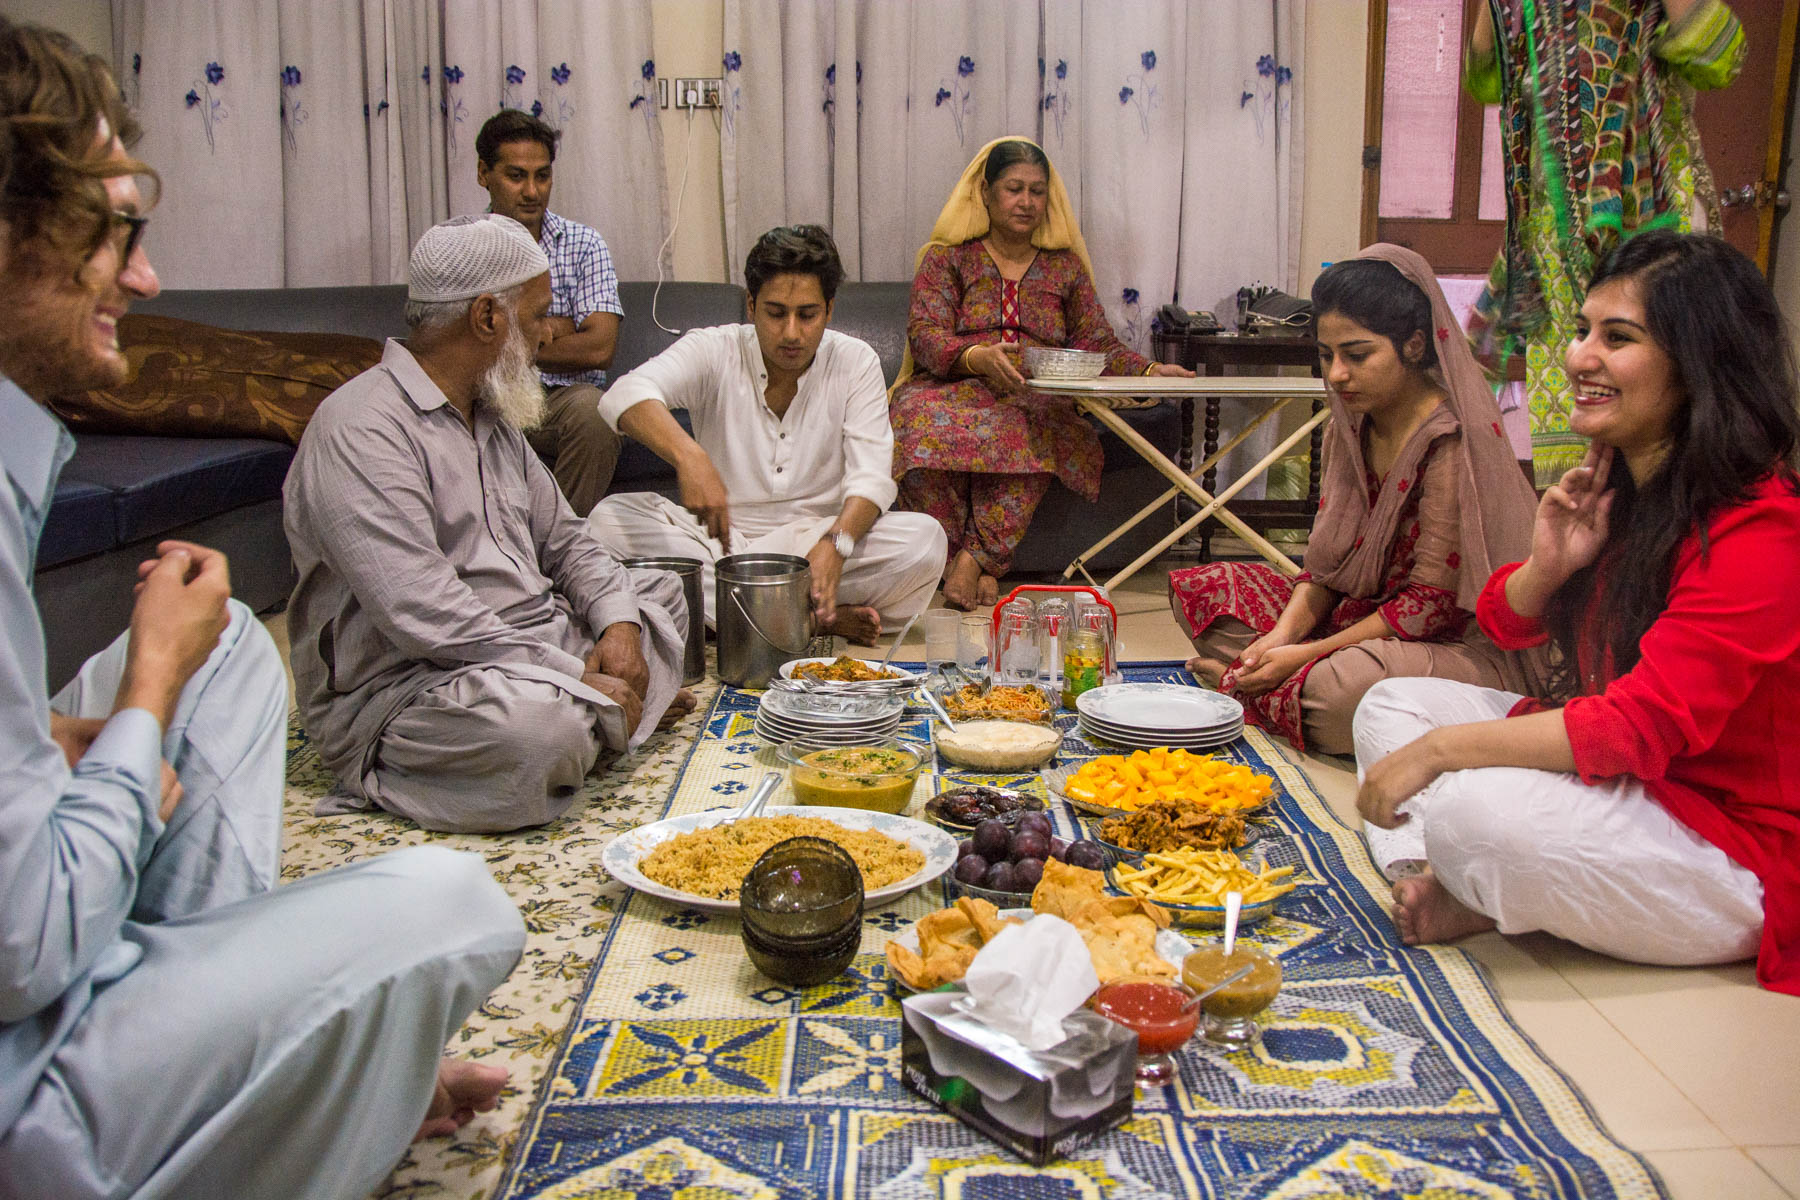 Travel in Pakistan during Ramadan - Iftar with Let's Go to Pakistan in Lahore, Pakistan - Lost With Purpose